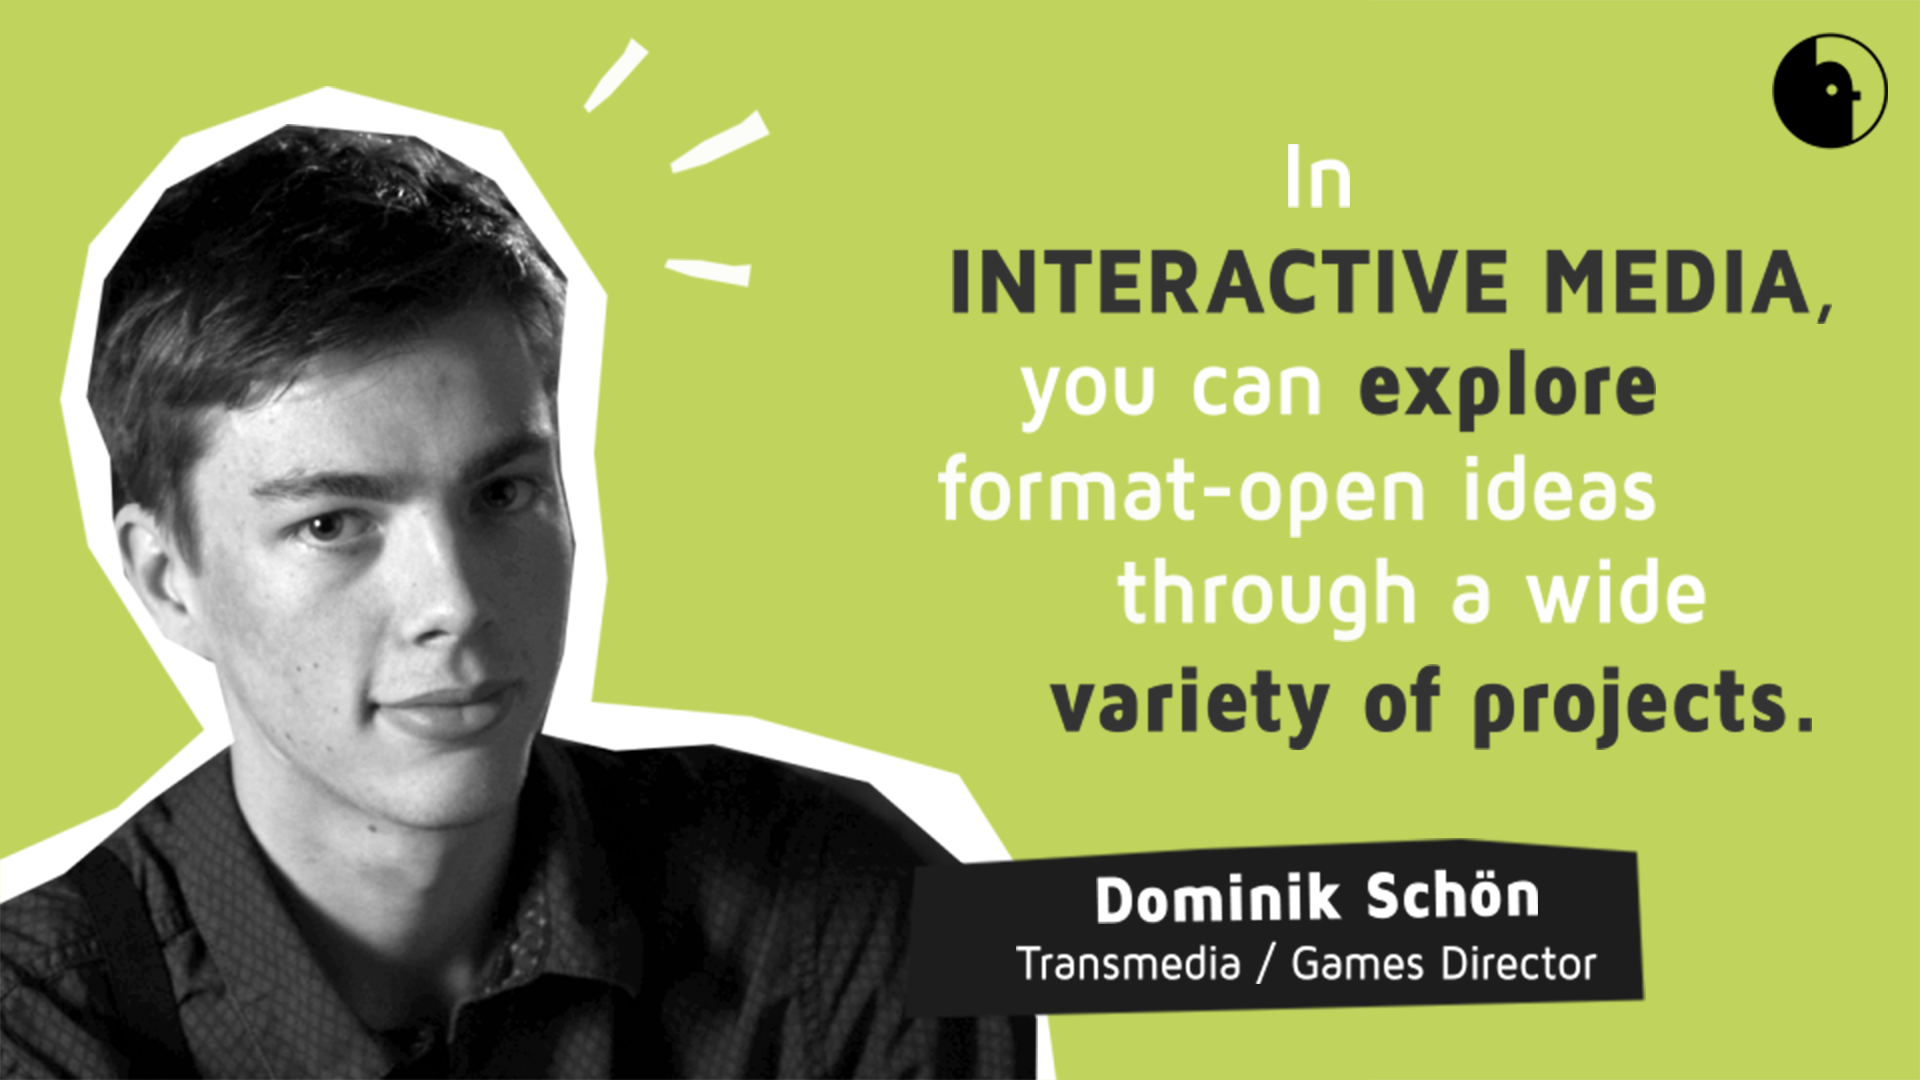 Transmedia/Games Director Dominik Schön